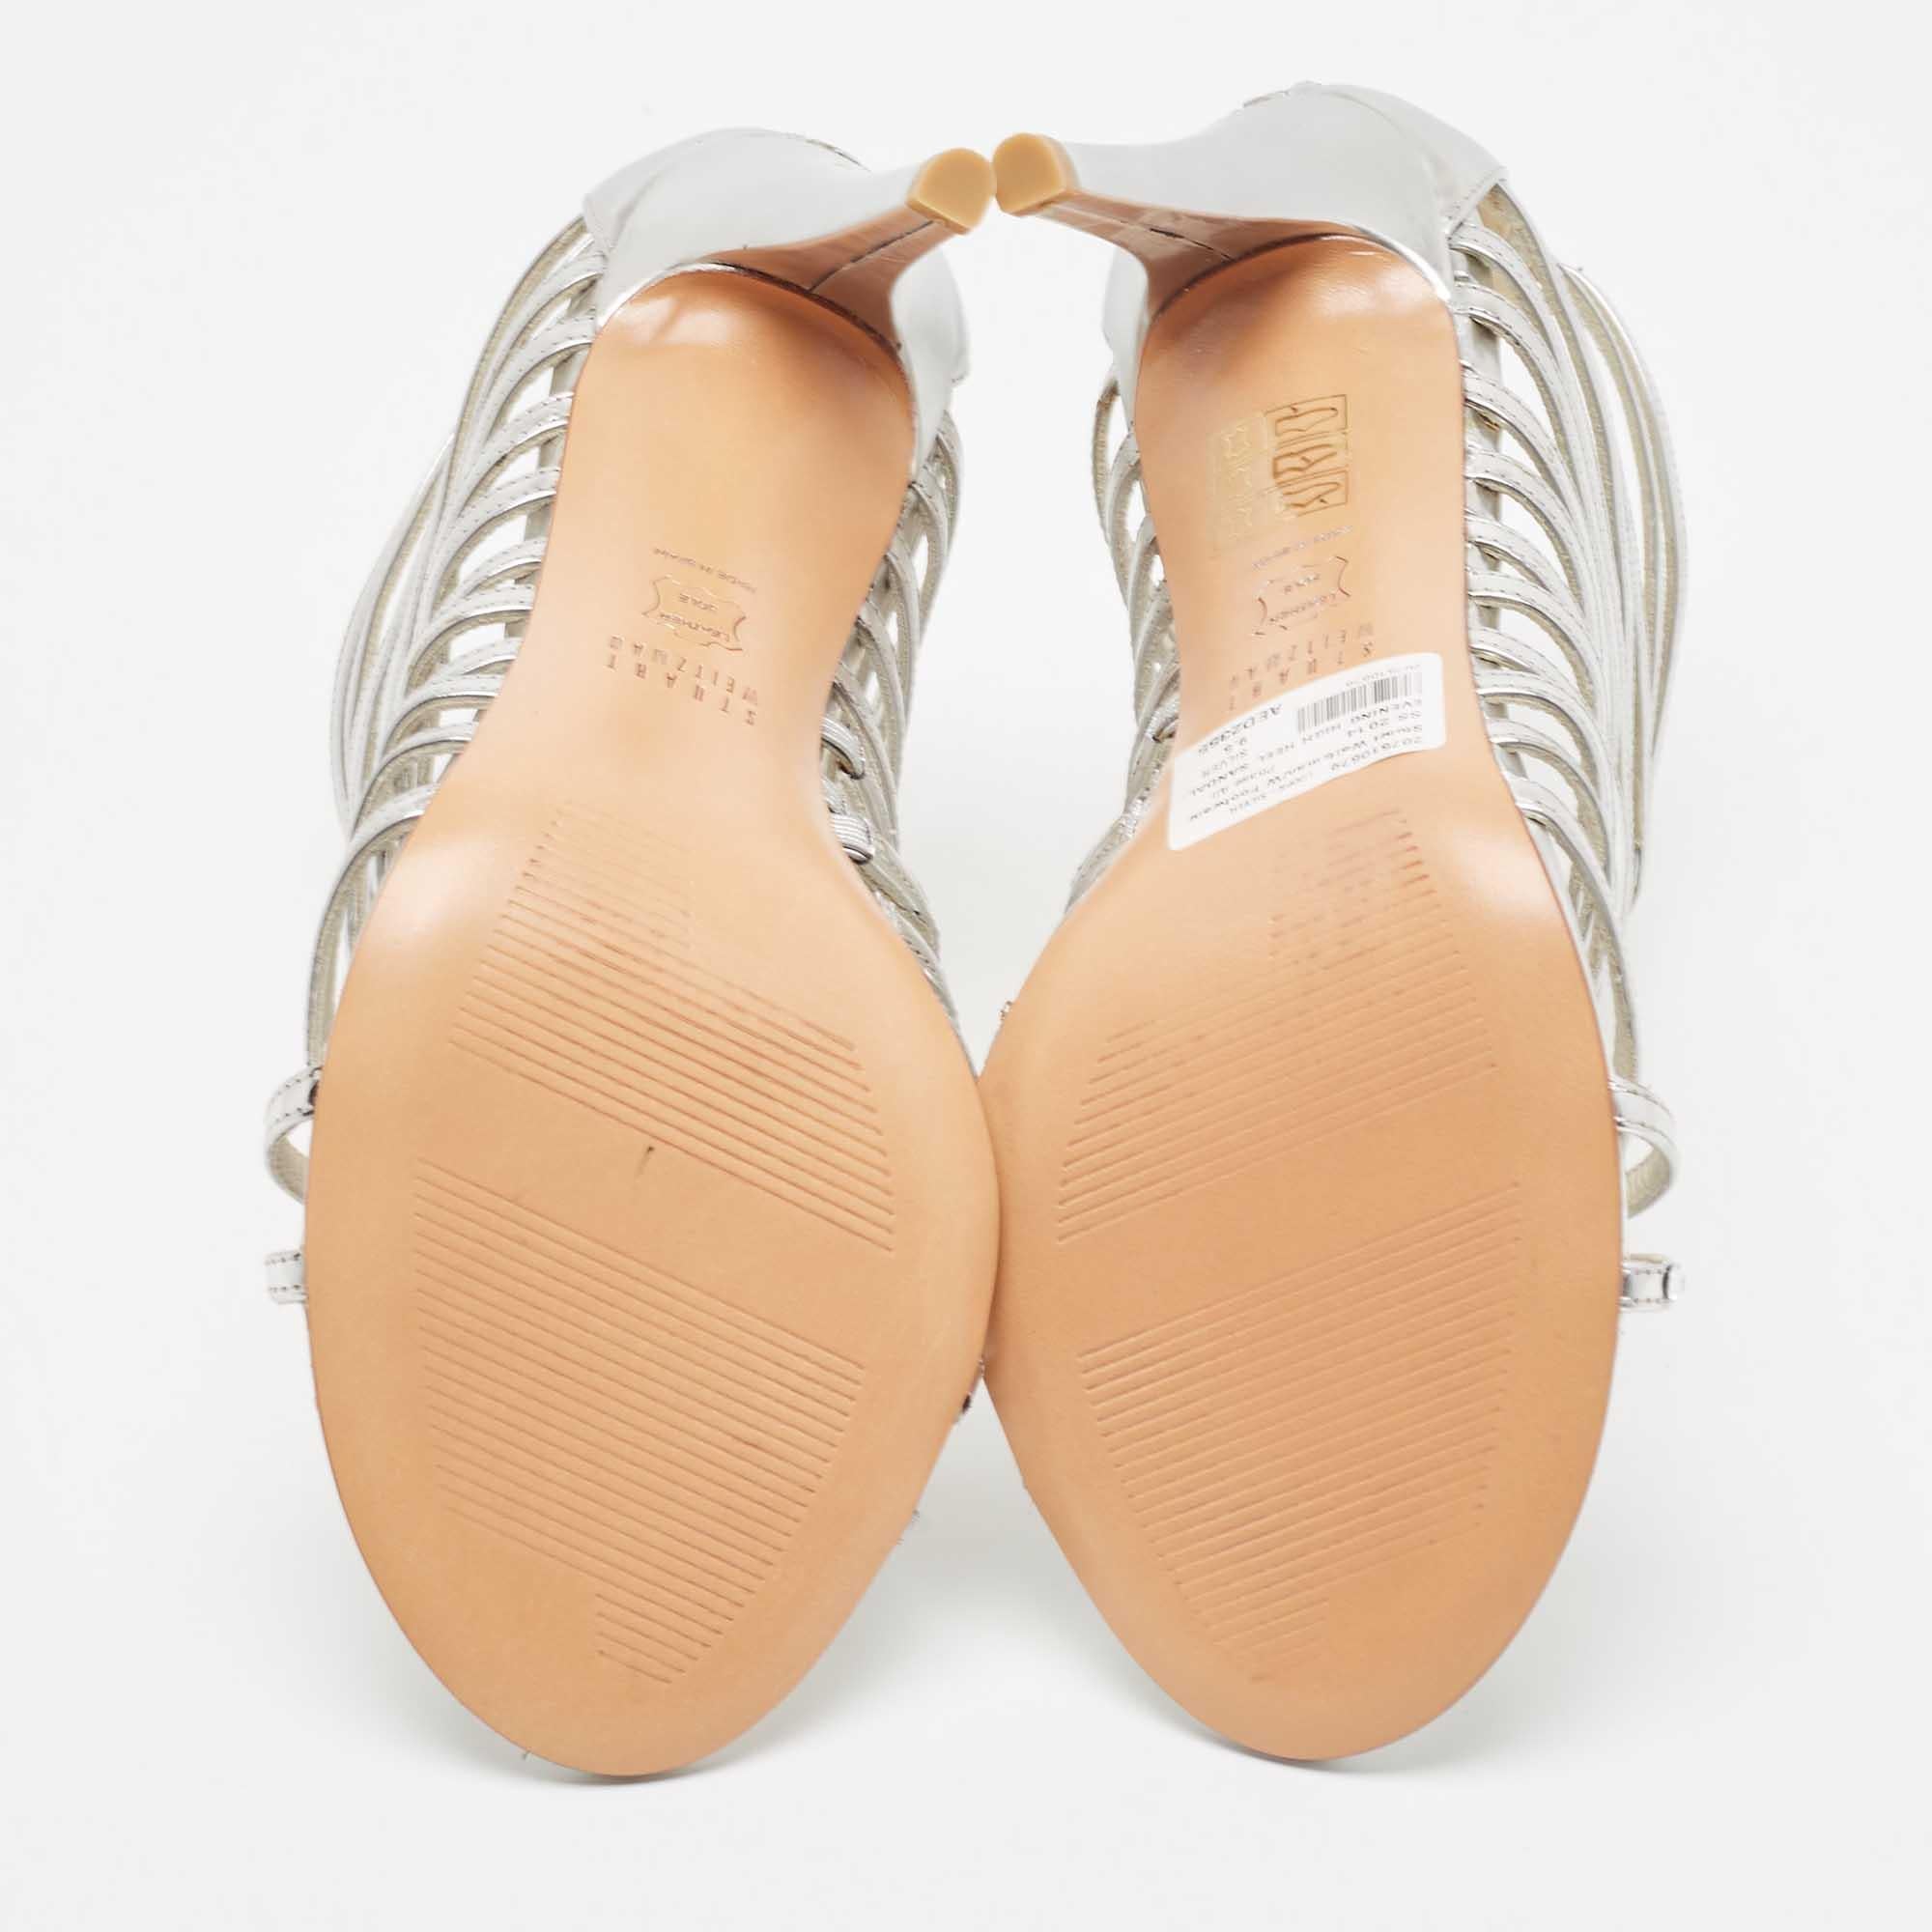 Stuart Weitzman Leather Crystal Embellished Strappy Sandals Size 39.5 For Sale 1